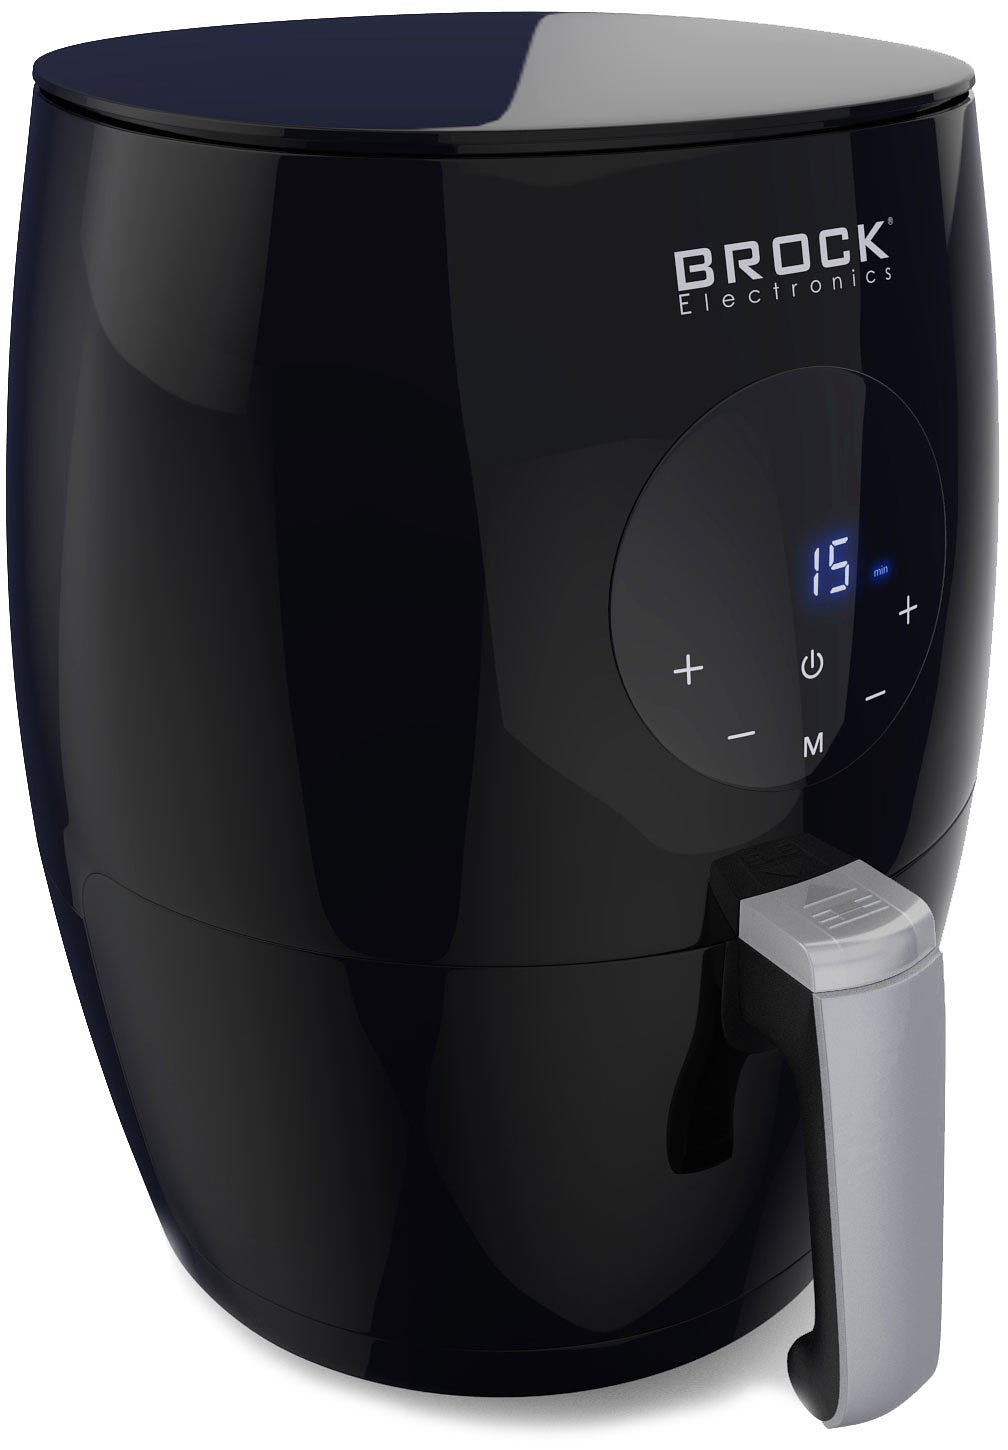 BROCK Electronics Airfryer AFD 3502 BK (3.5 liter, 1200W, Digitaal)